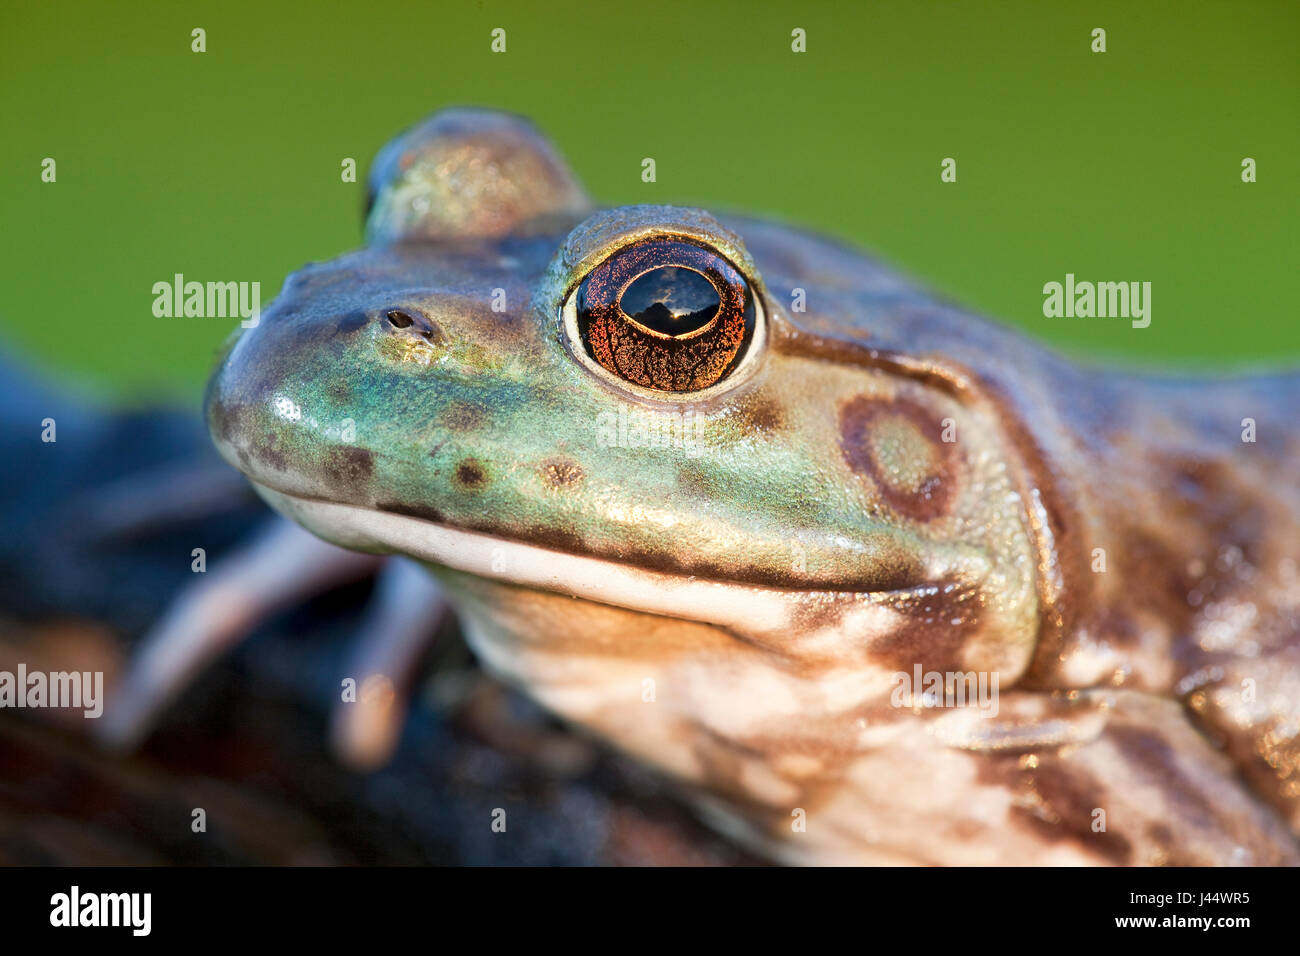 Portret de un norteamericano Bullfrog Foto de stock